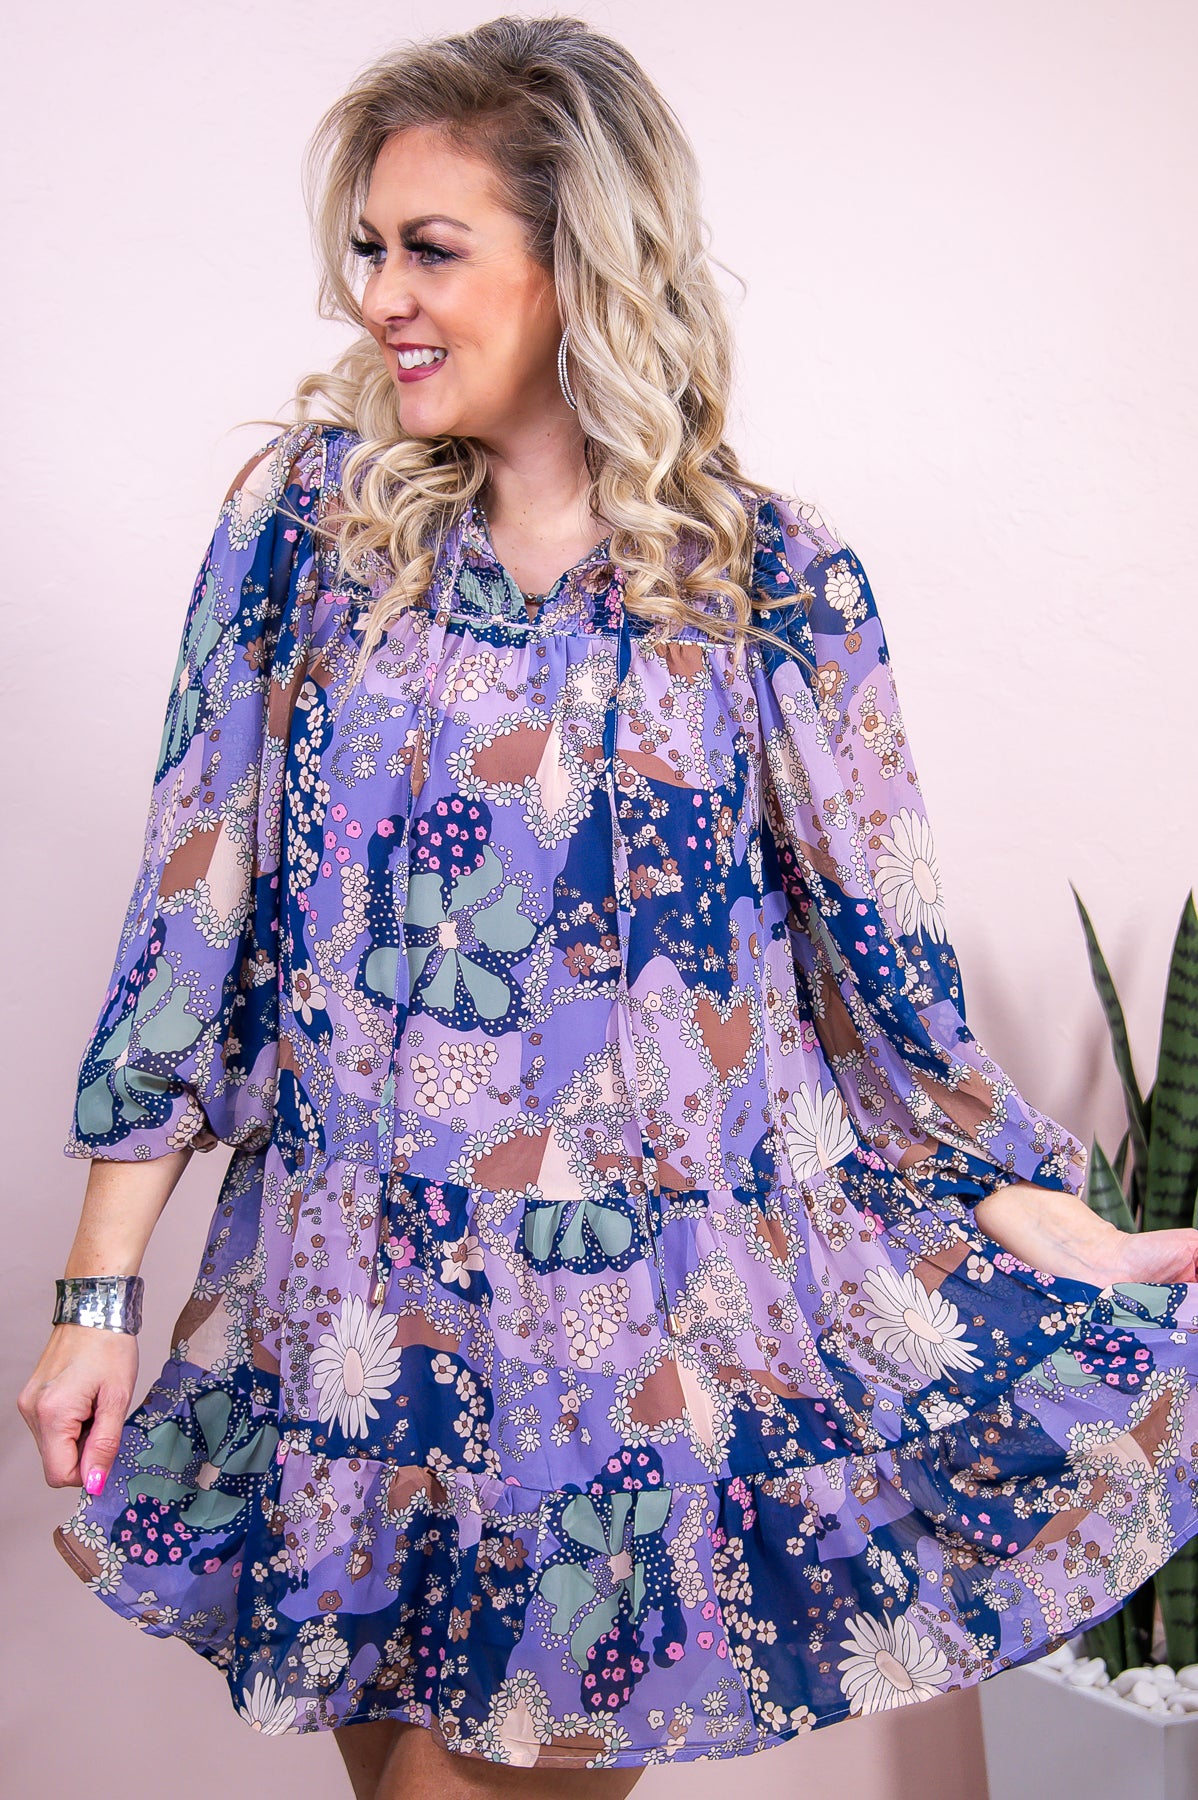 Cute & Full Of Sugar Purple/Multi Color Floral Dress - D5155PU